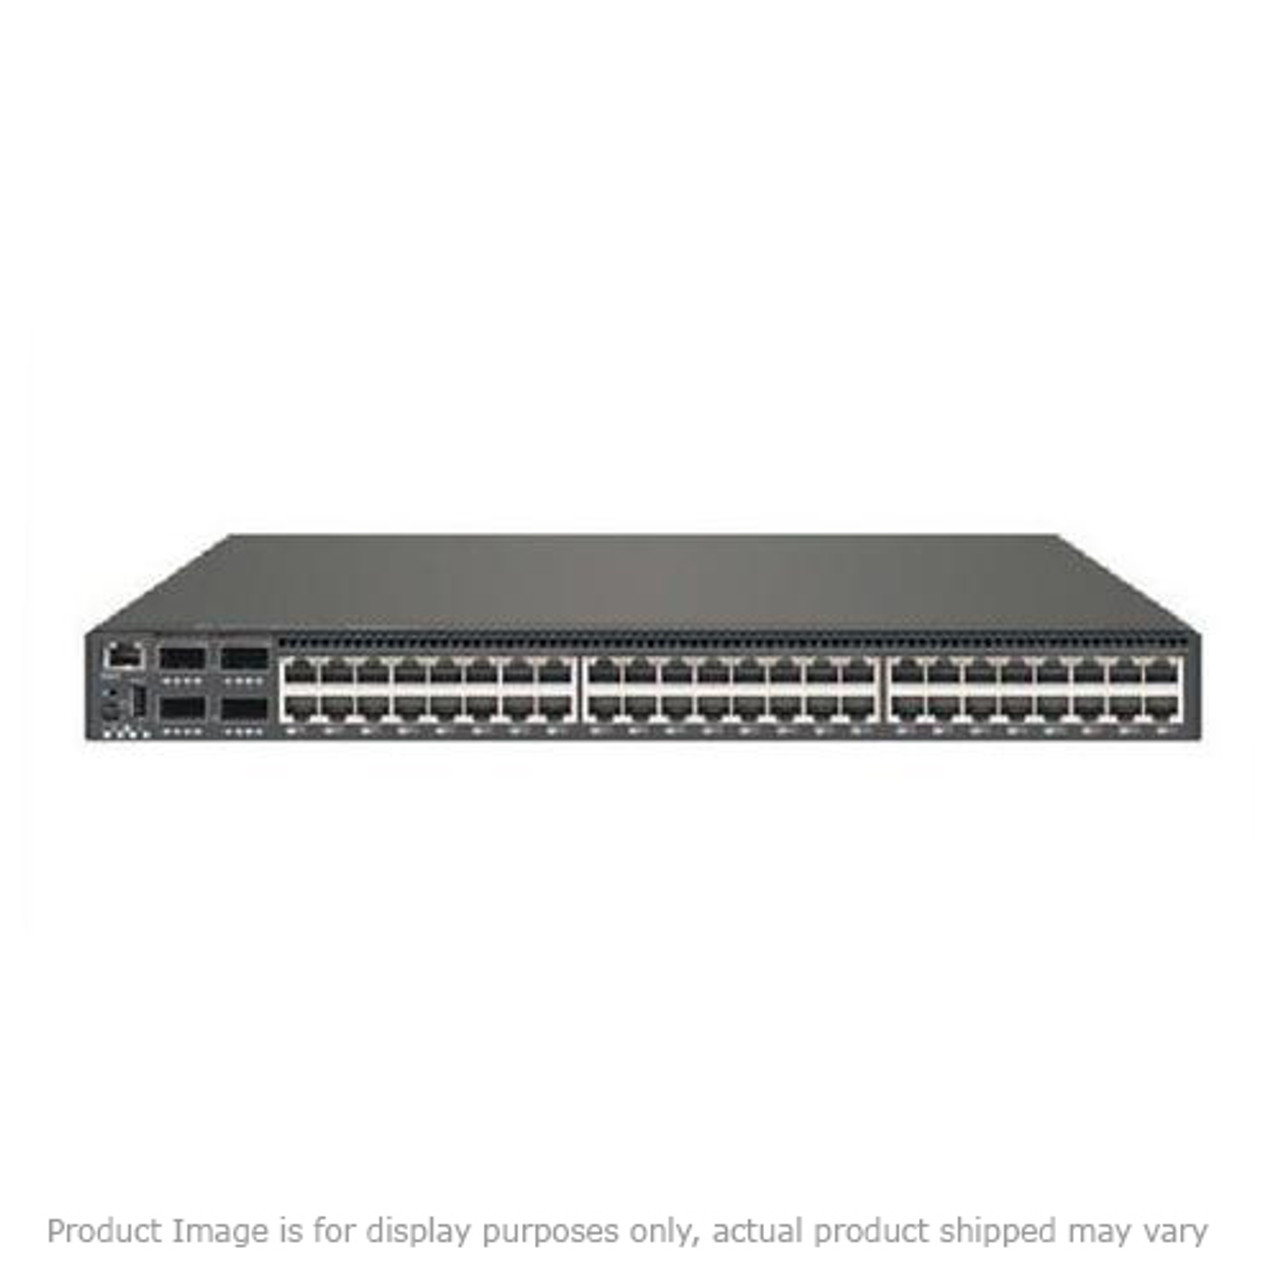 327337-291 Compaq ServerNet 6-Port Rack Mountable SAN Switch (Refurbished)